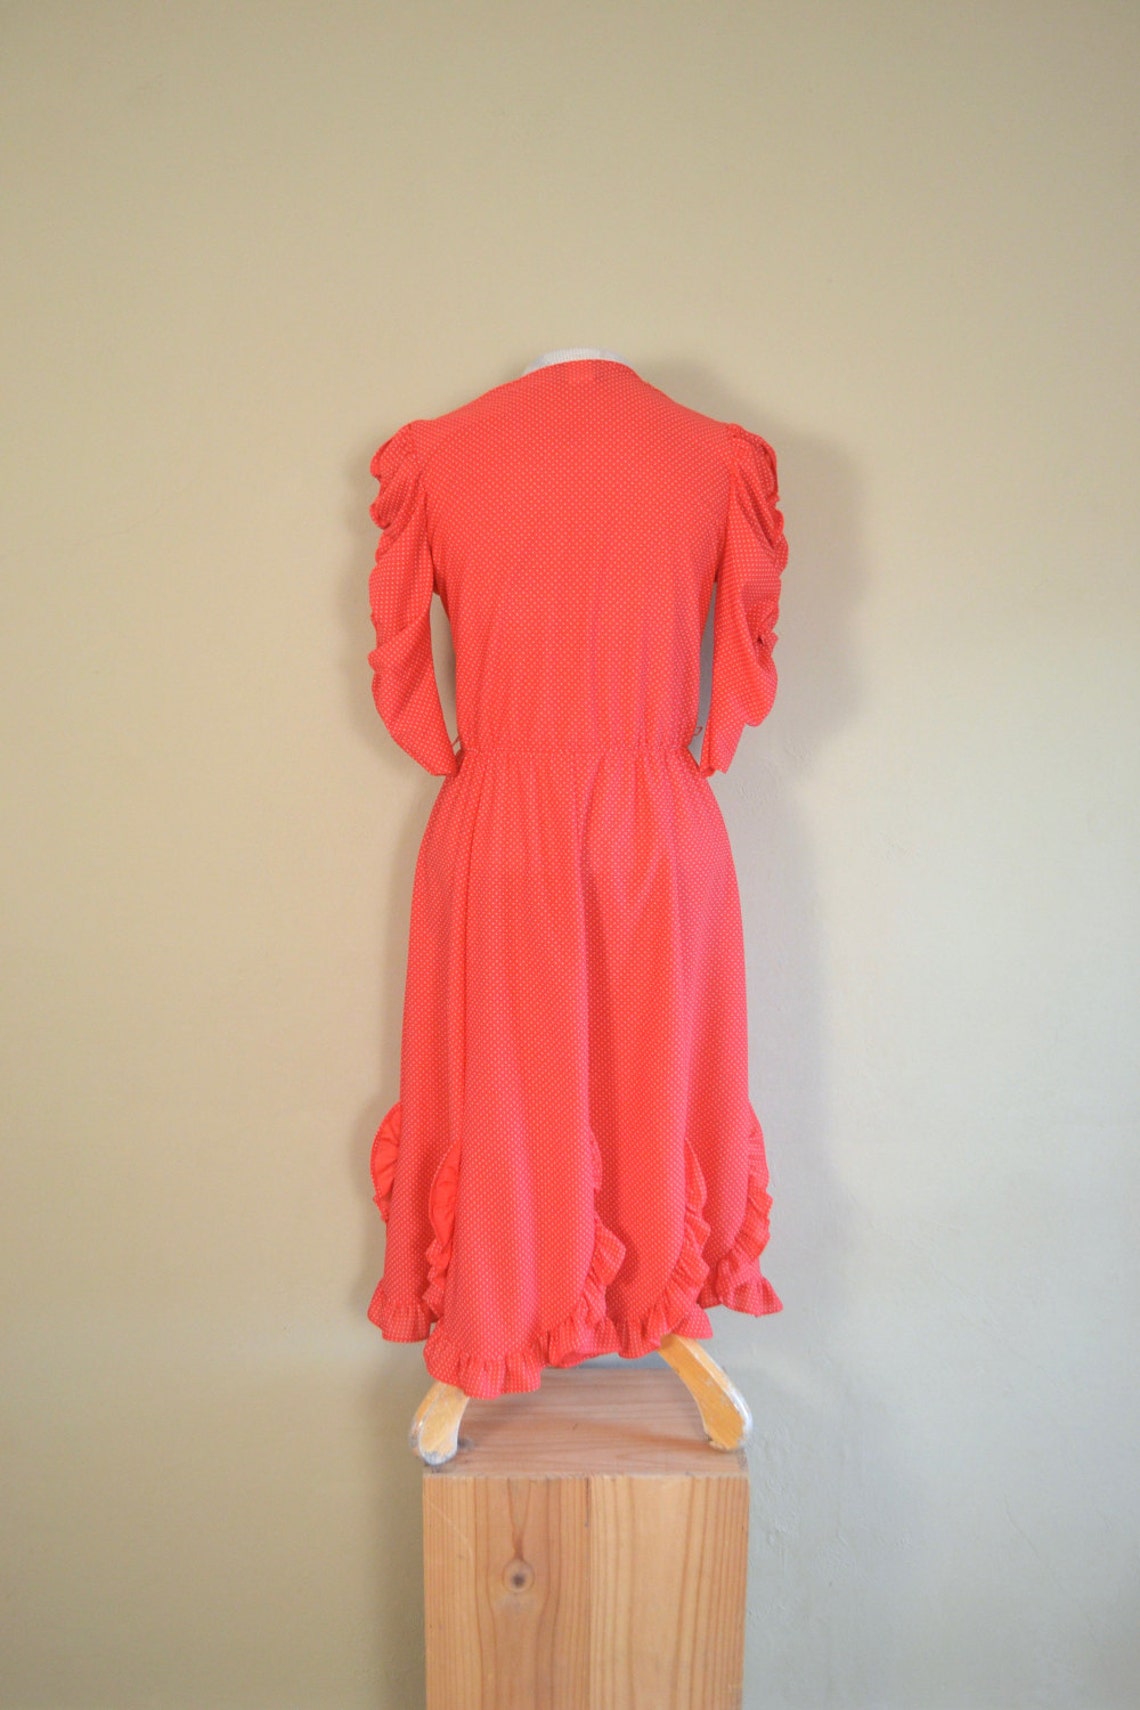 Vintage Red Ruffled Dancing Dress // 1980s Polka Dot - Etsy